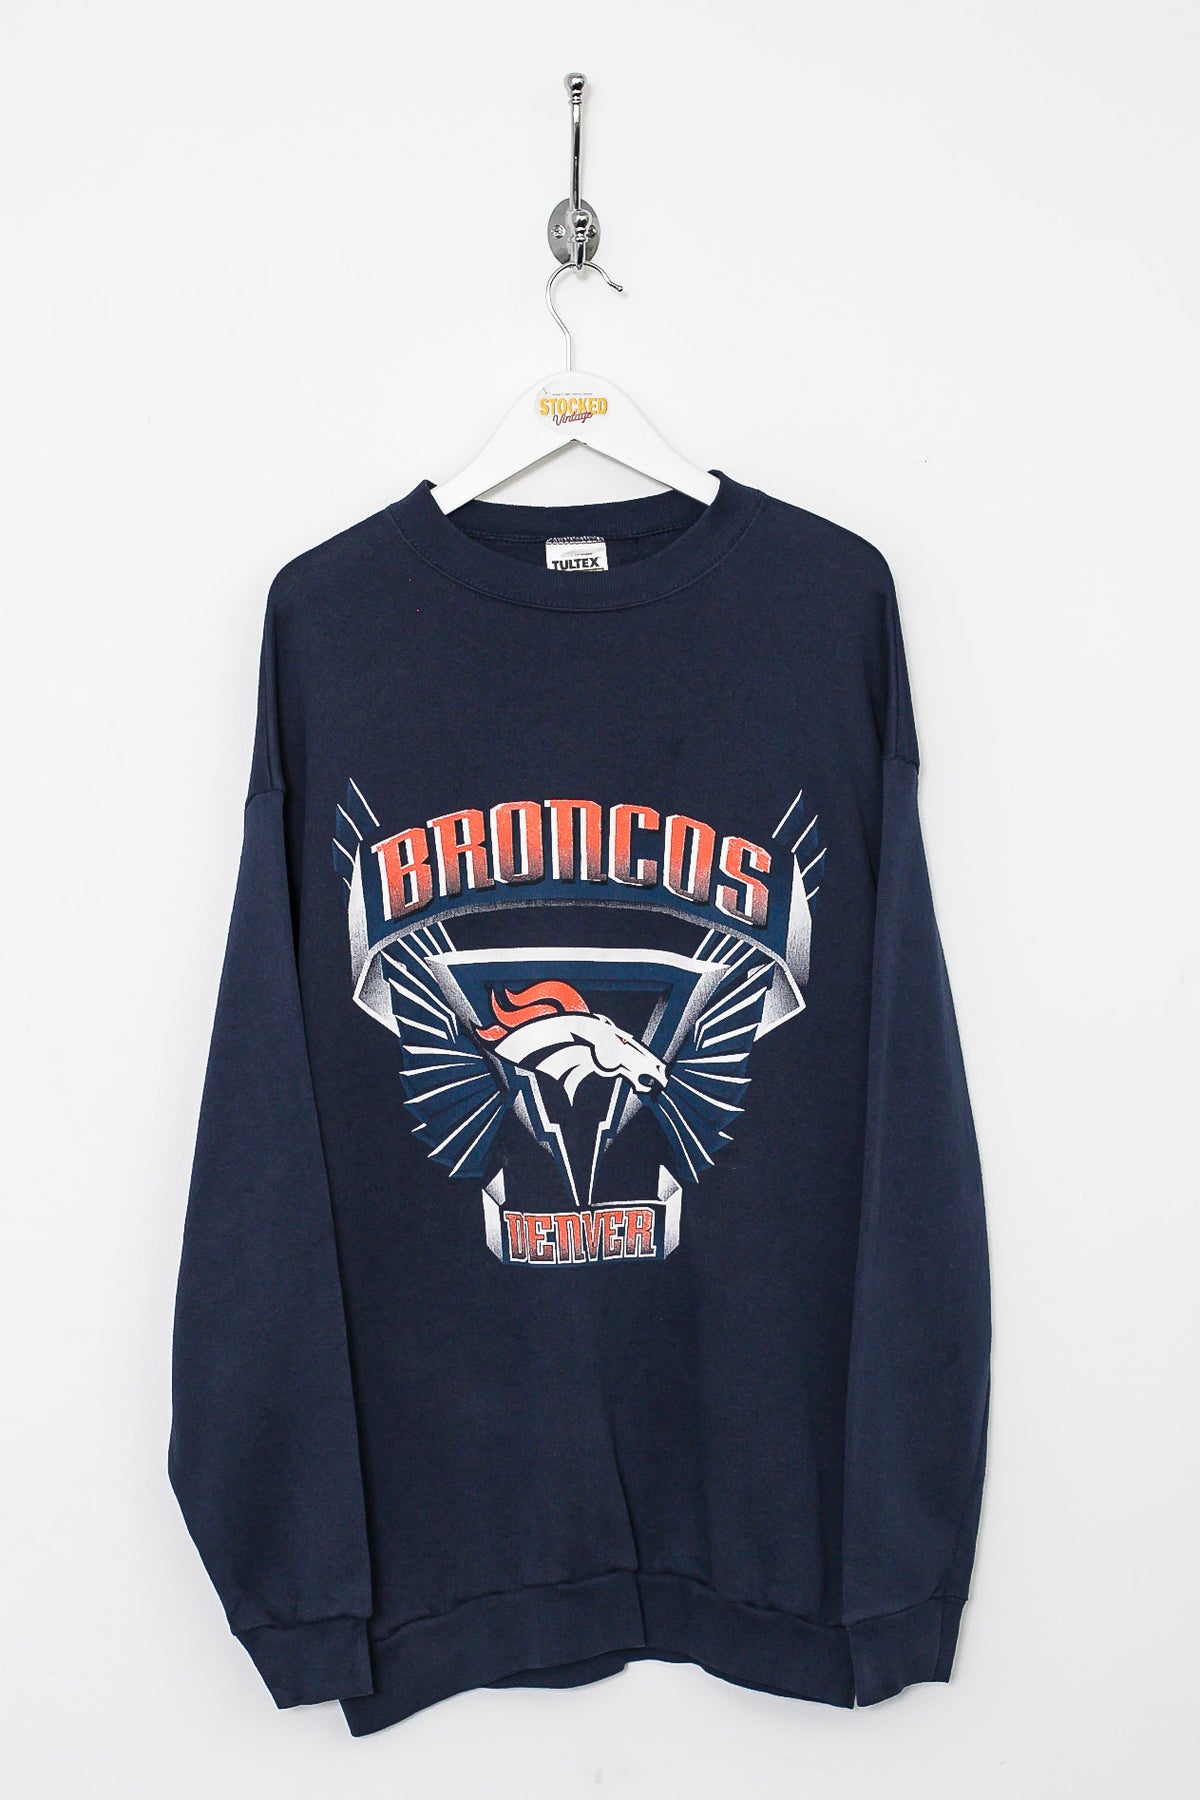 90s Denver Broncos Sweatshirt (M)